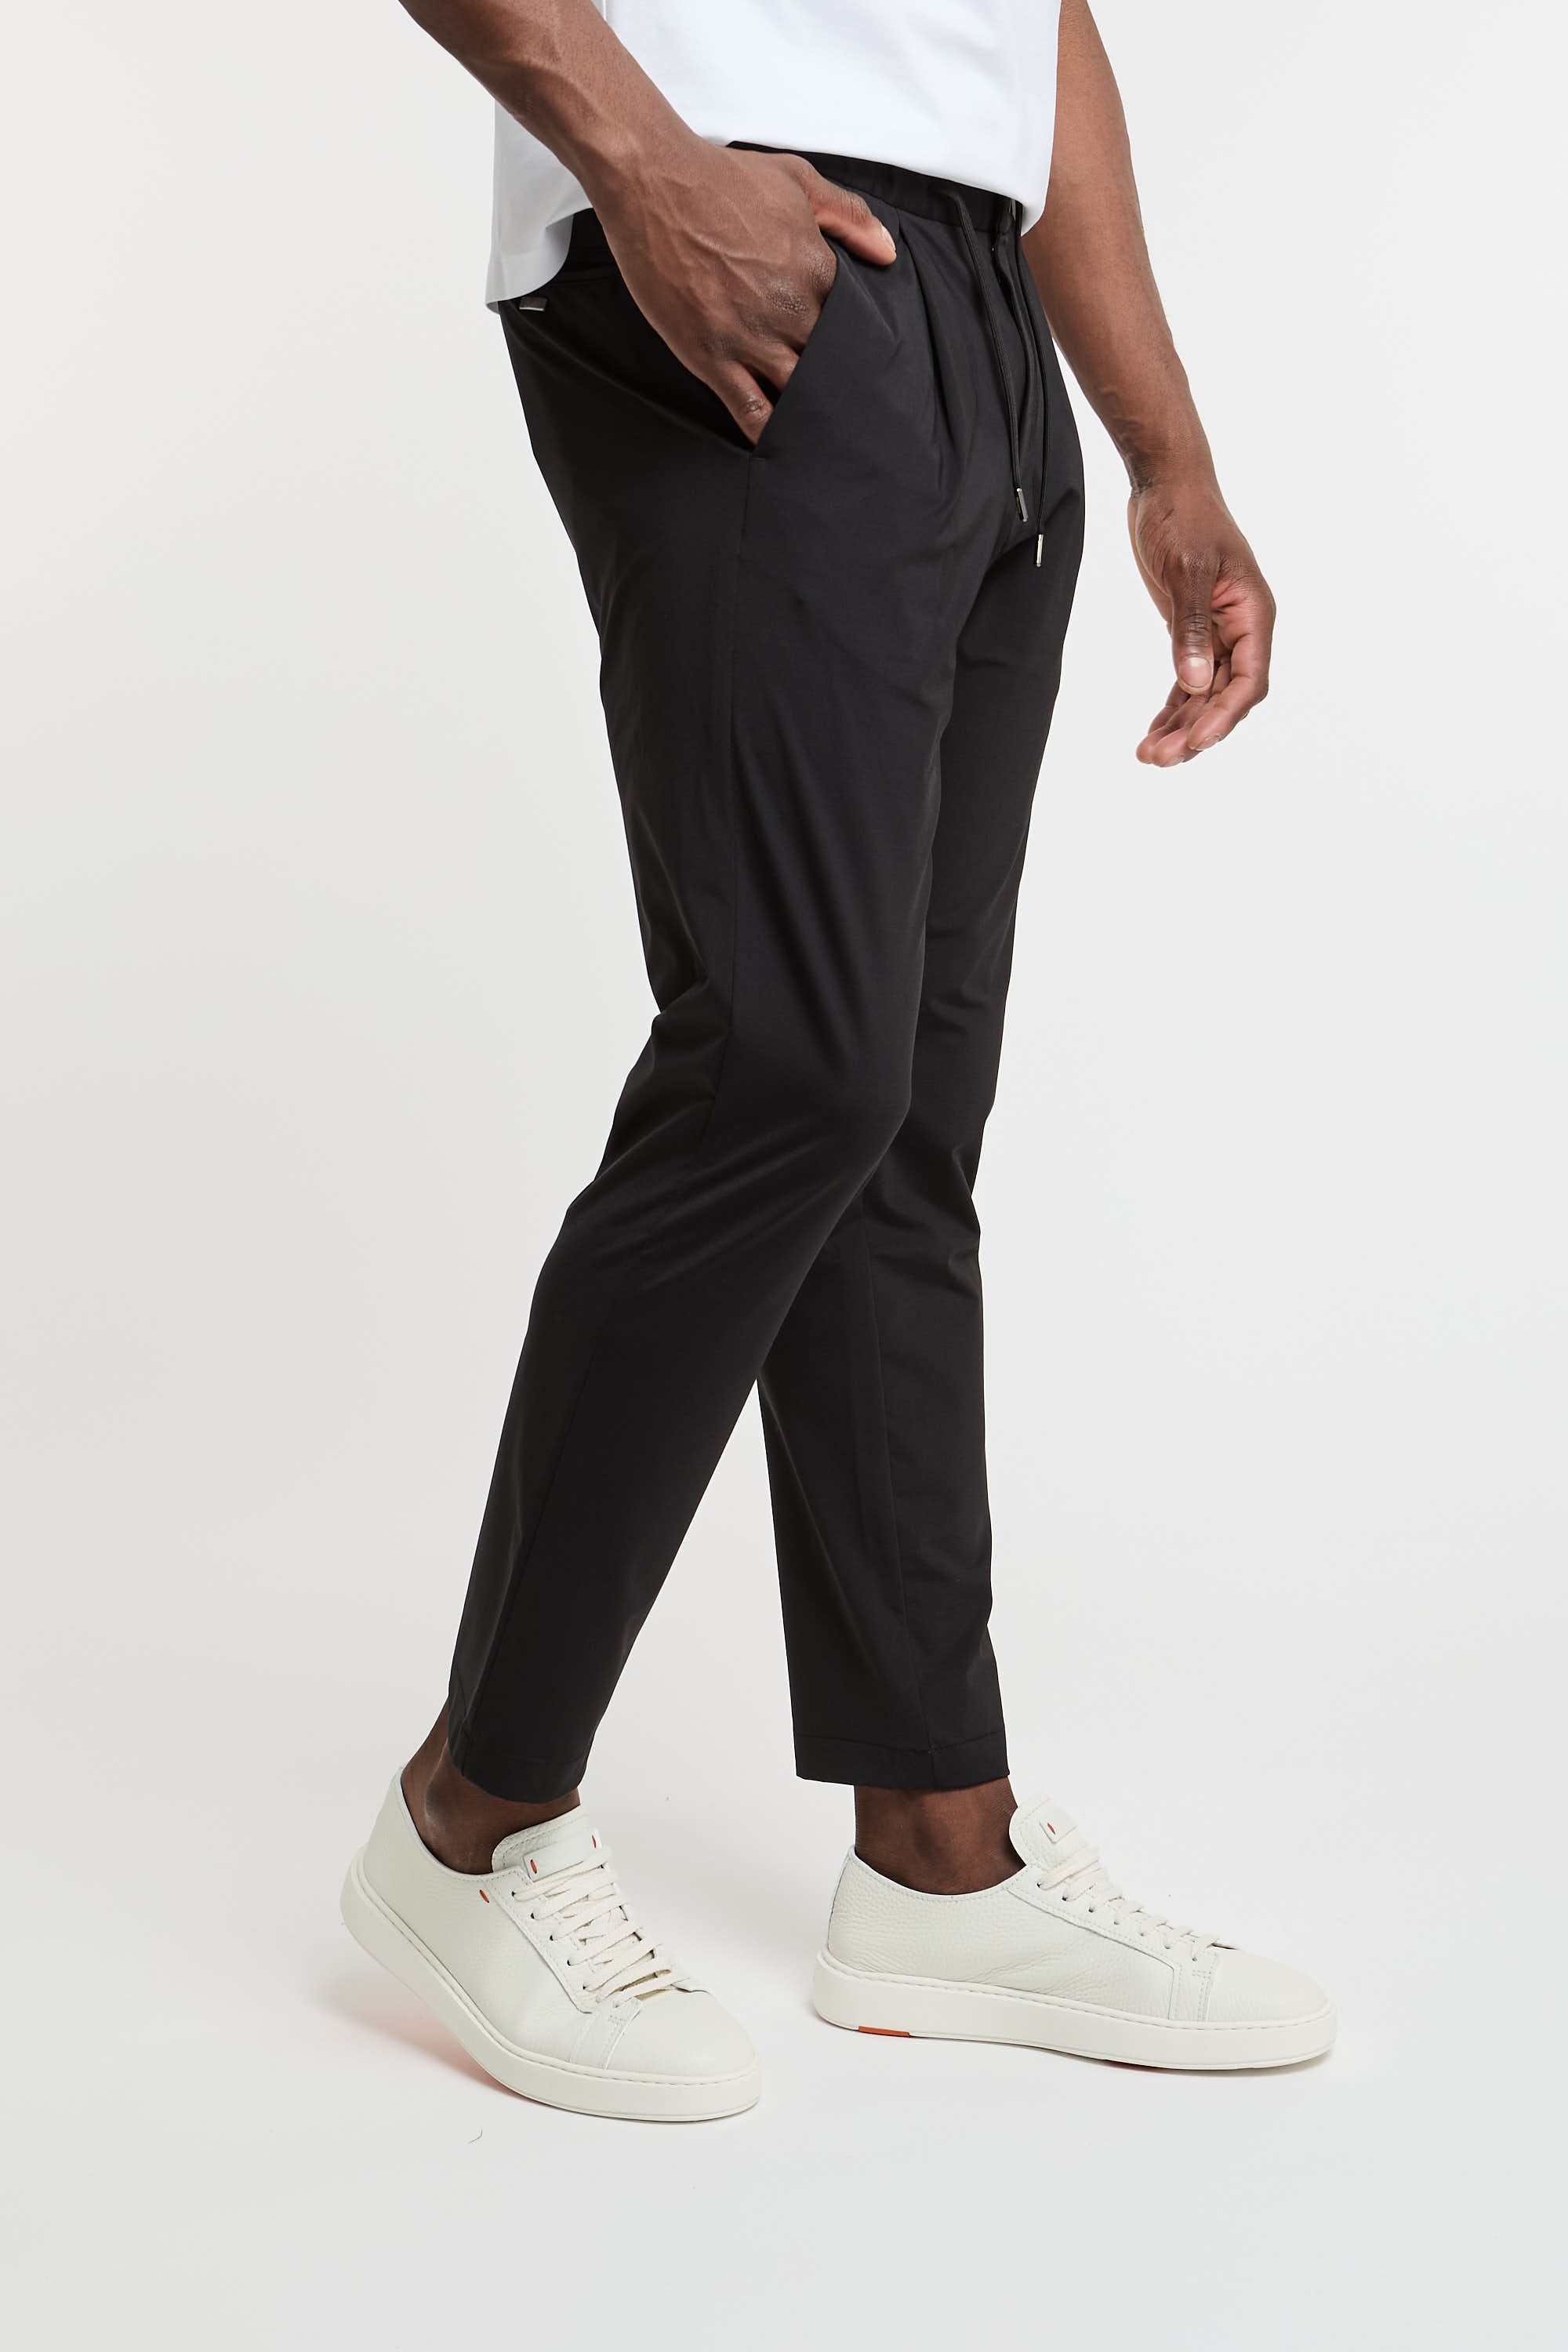 Herno Black Nylon Jersey Pants-3